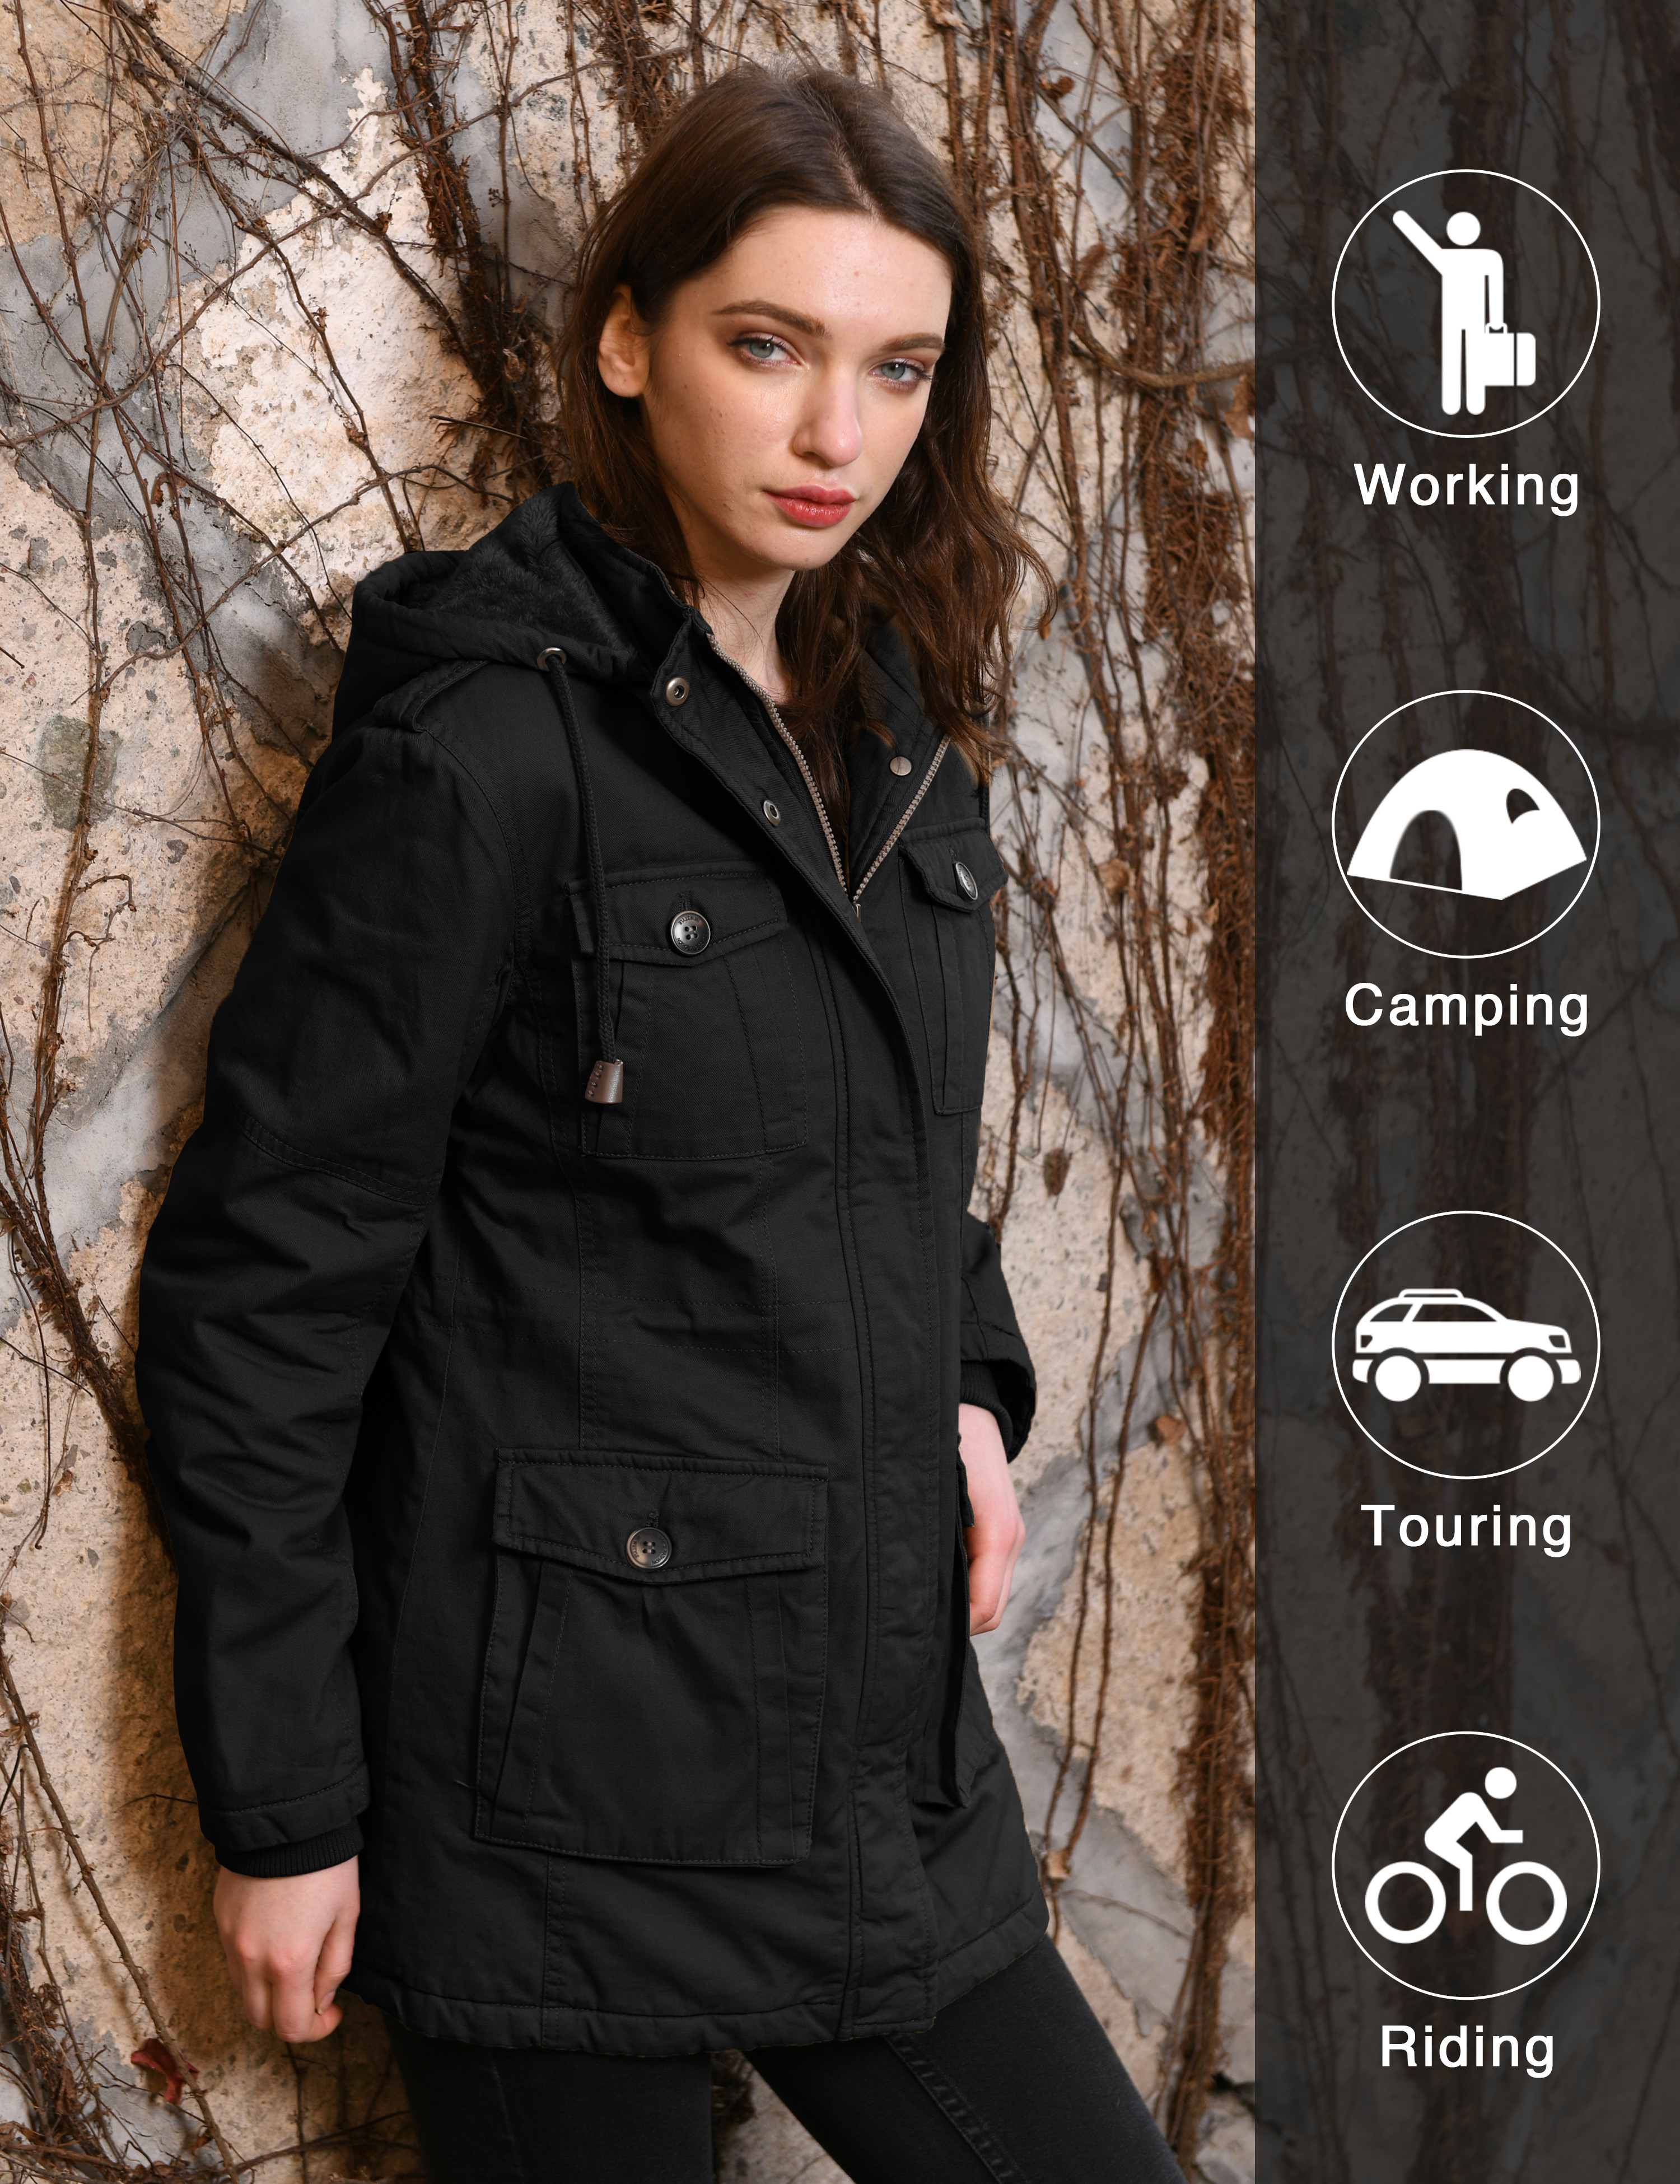 Wantdo Women's Winter Warm Coat Parka Jacket with Removable Hood Black Size S - image 2 of 6